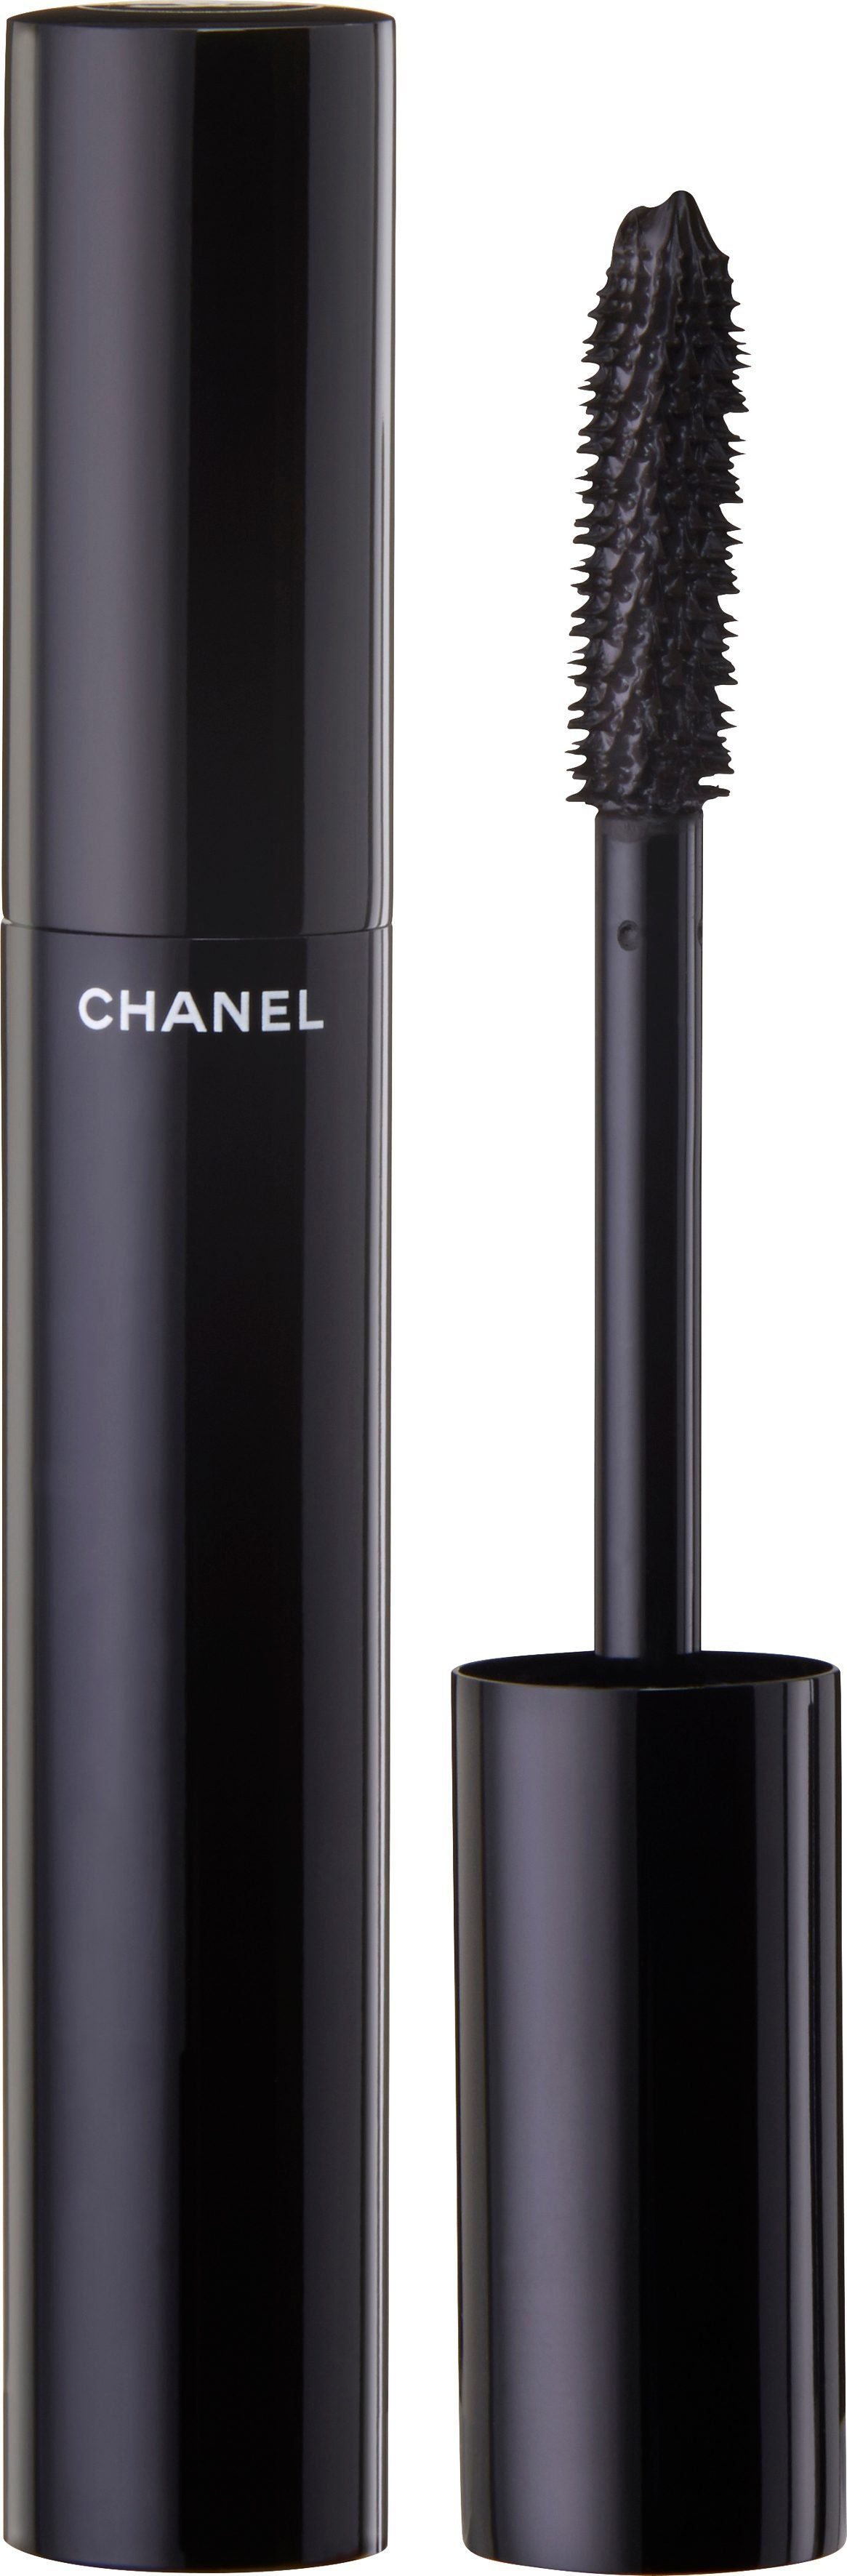 CHANEL Mascara Le Volume de Chanel, Bürste Innovative